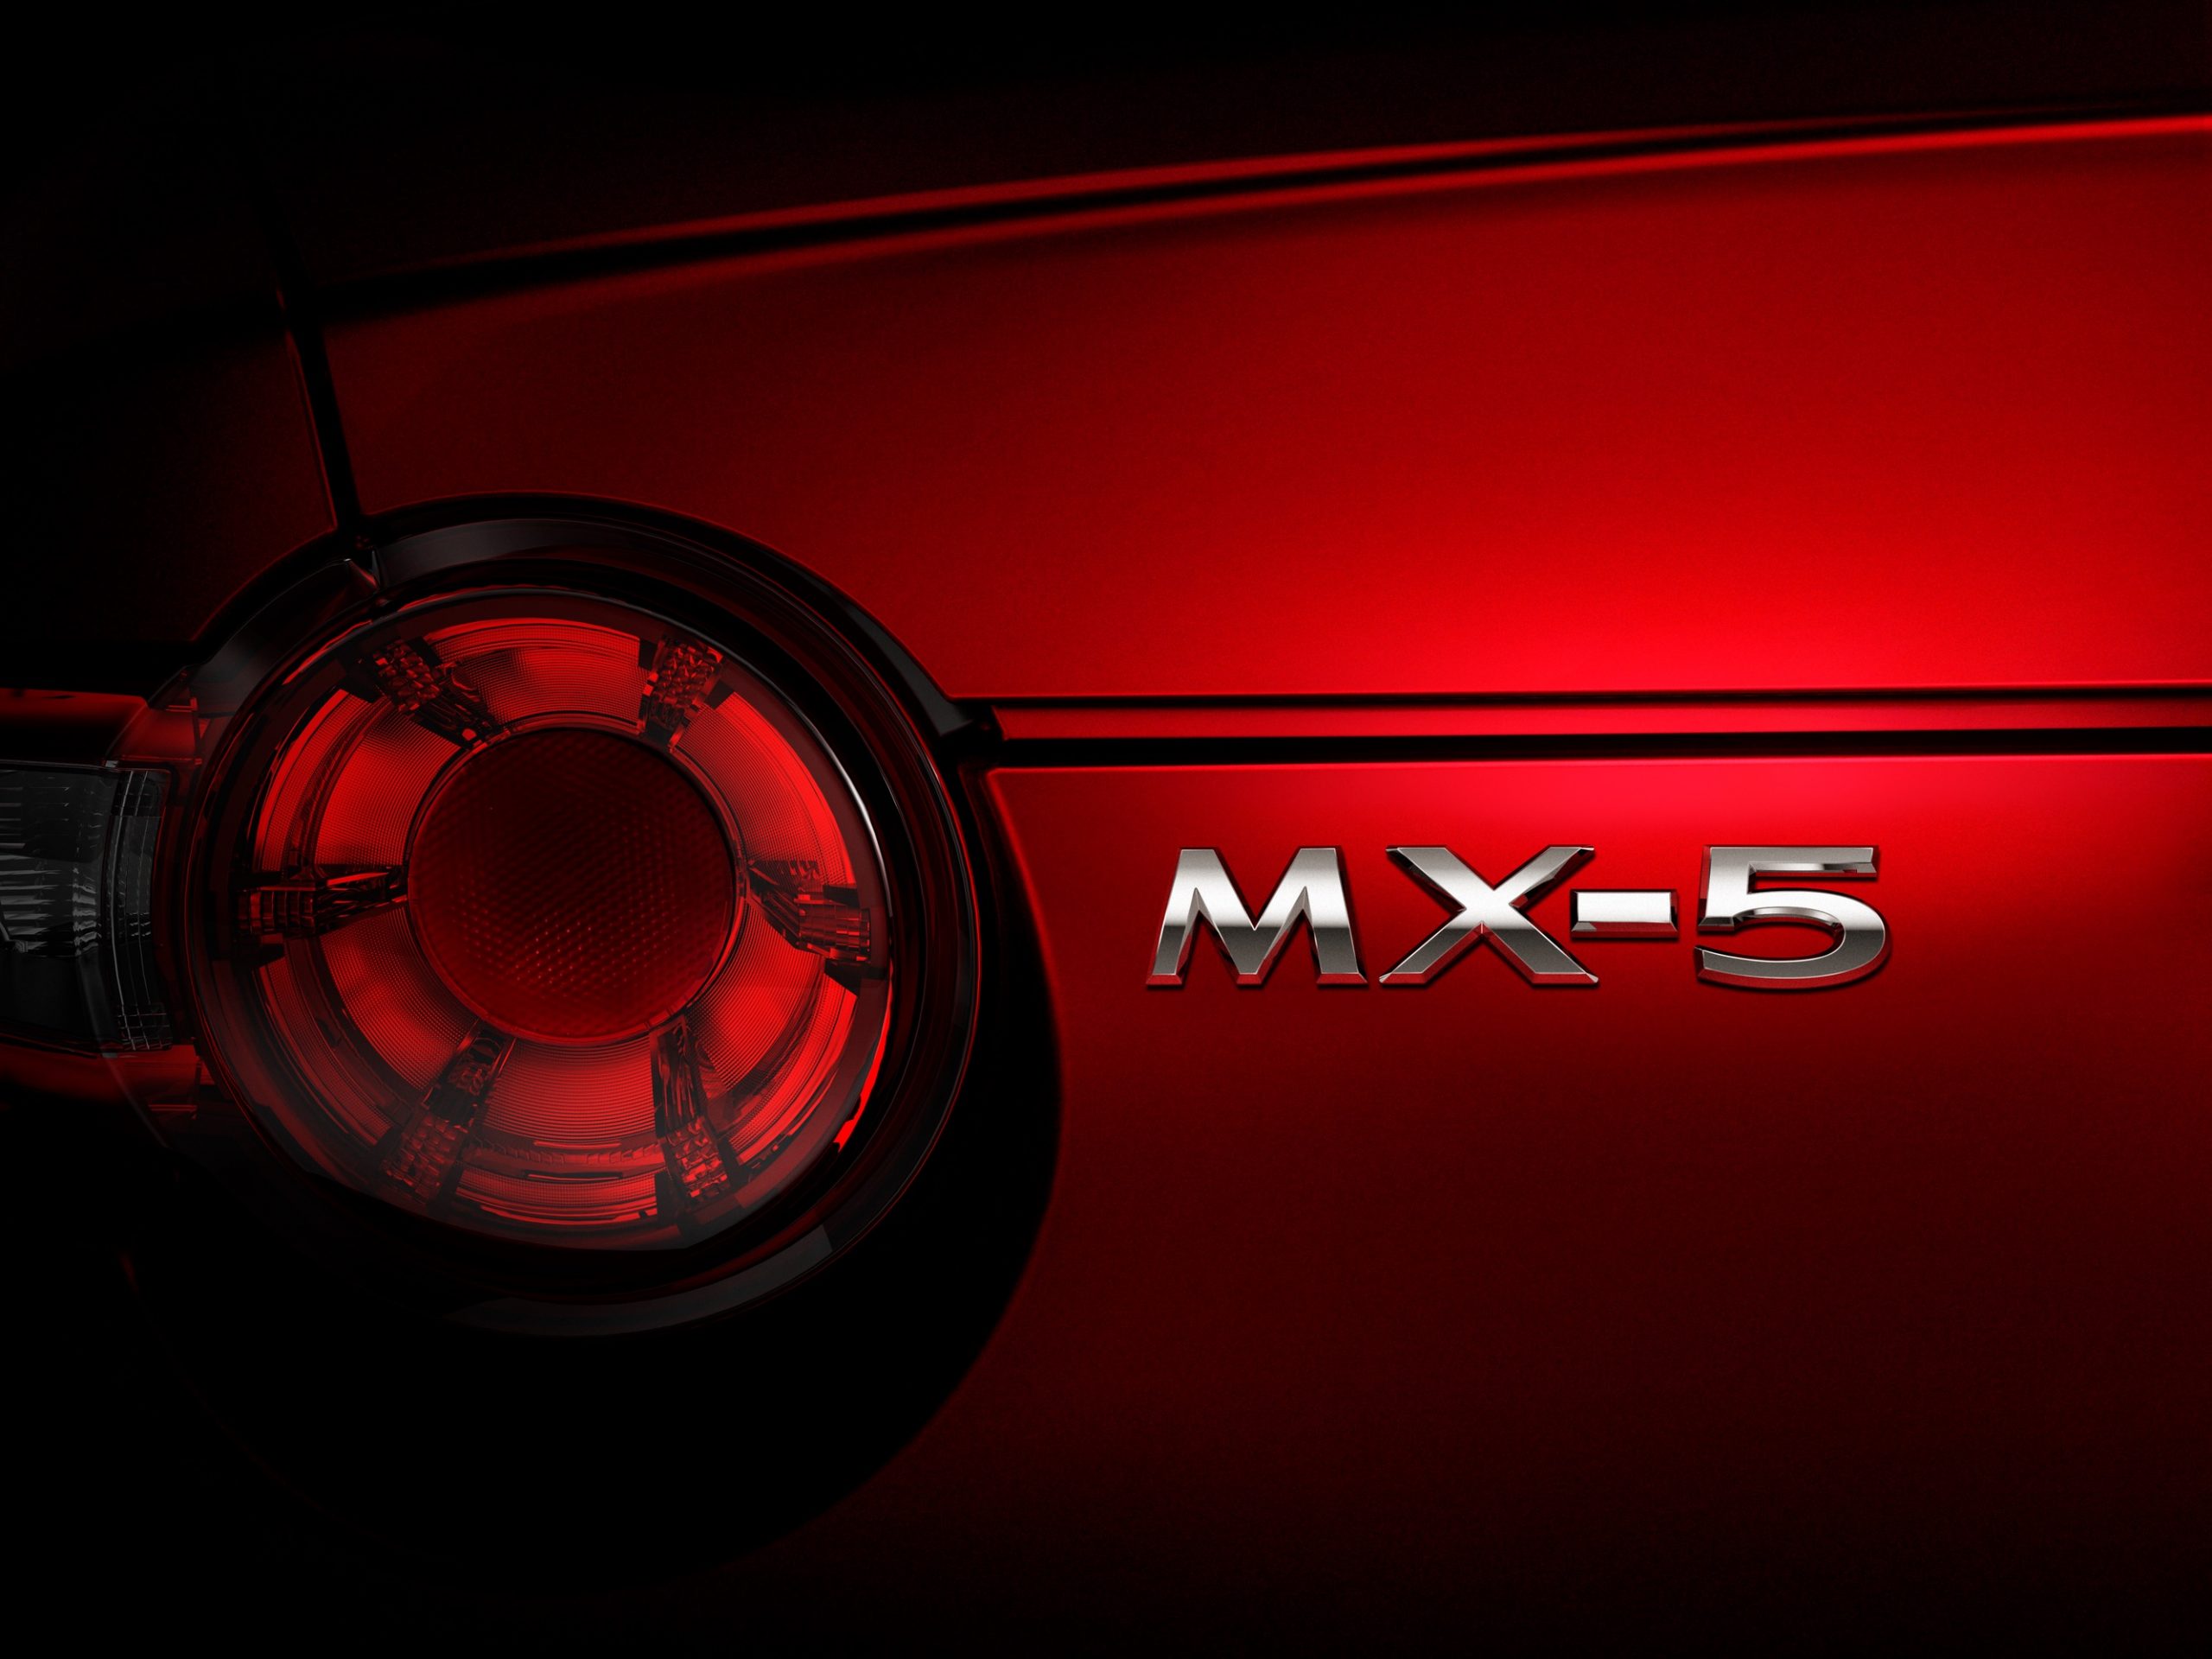 The MX-5 badge on the new Mazda Miata in red